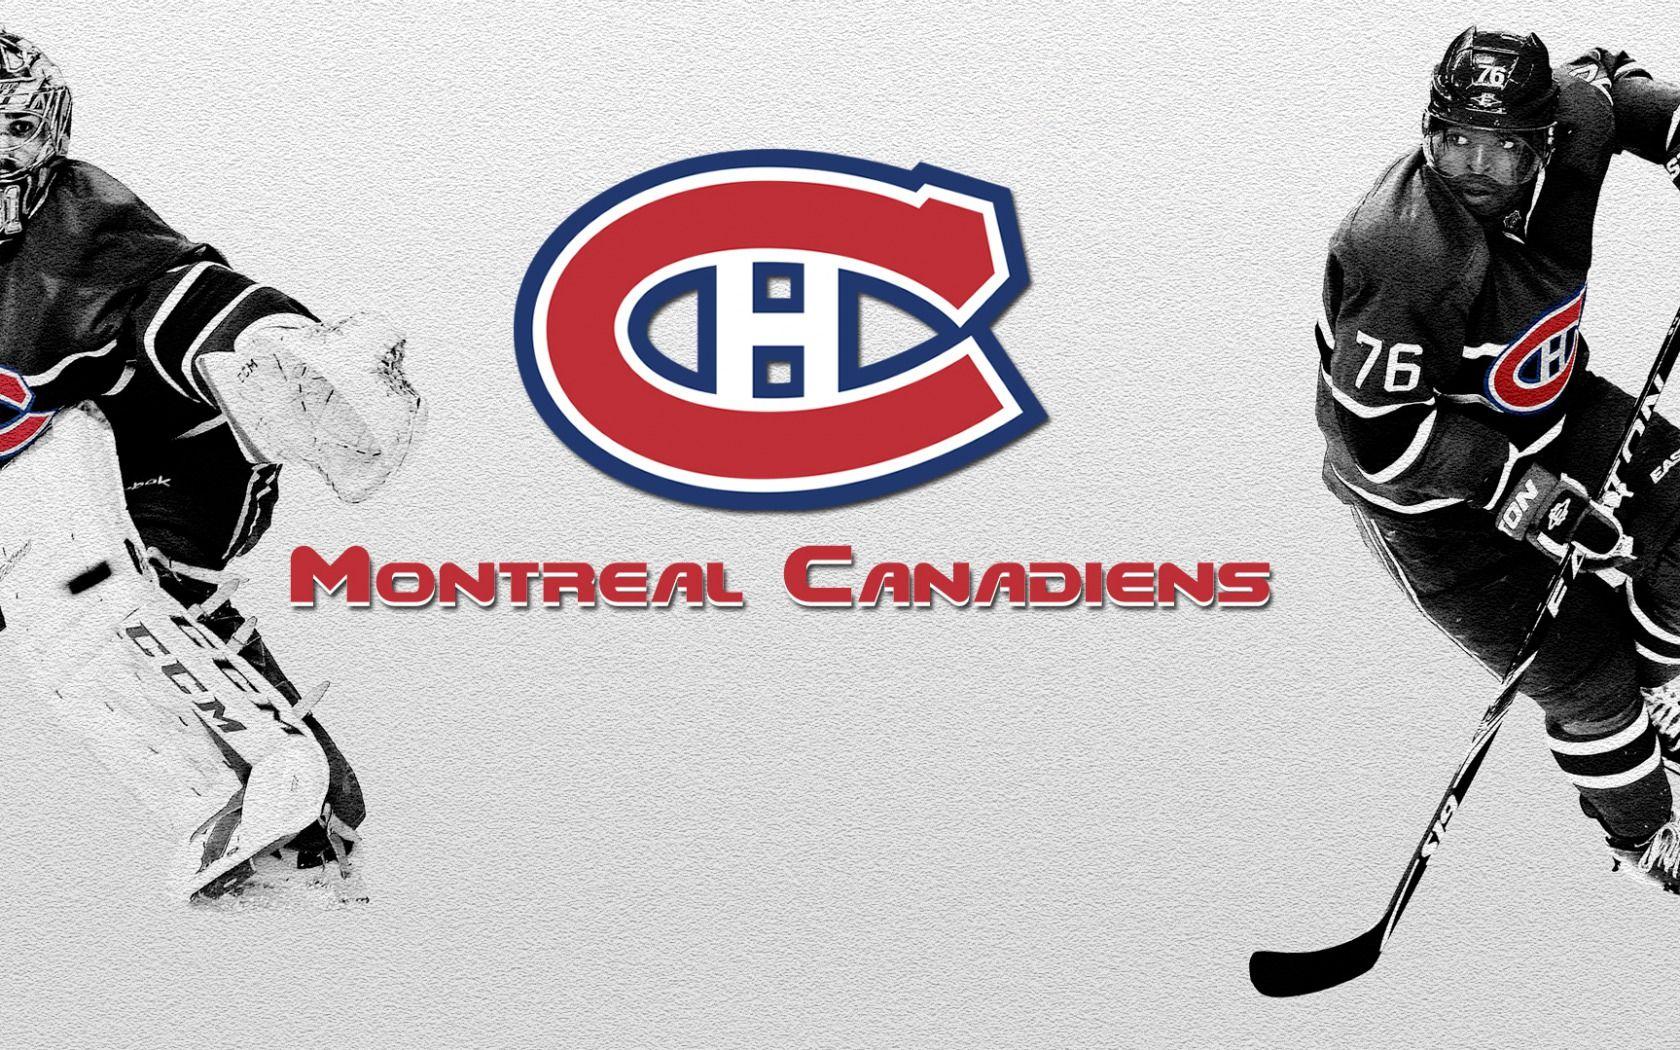 Montreal Canadiens image Montreal Canadiens Price, P. K